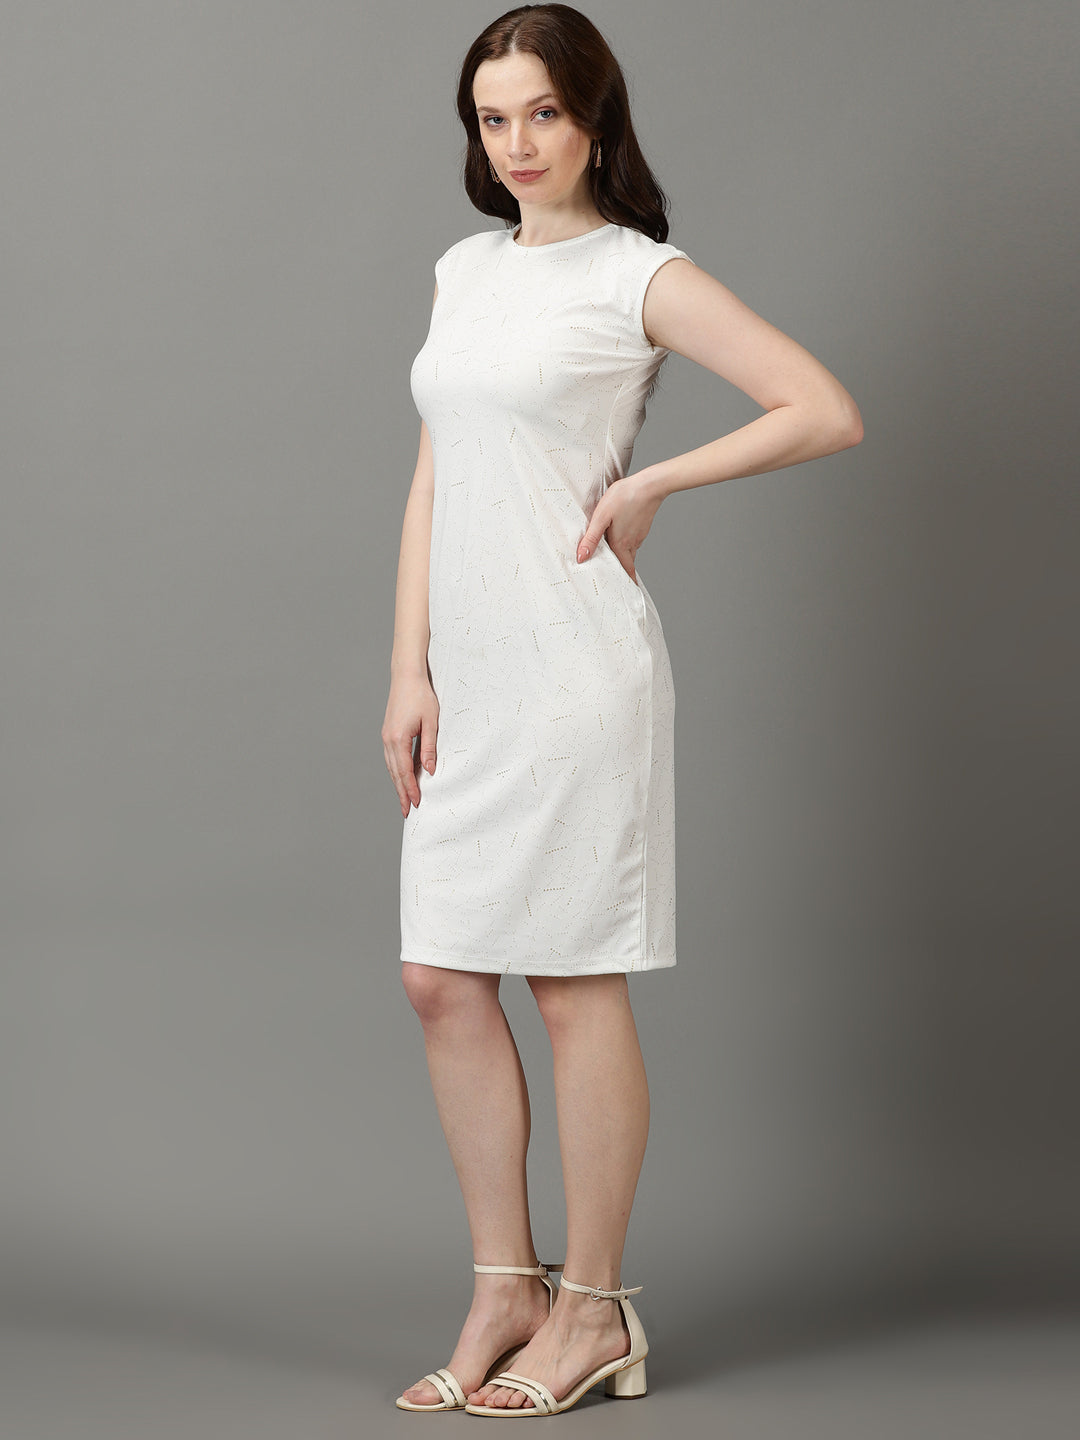 Women's White Embellished Bodycon Dress